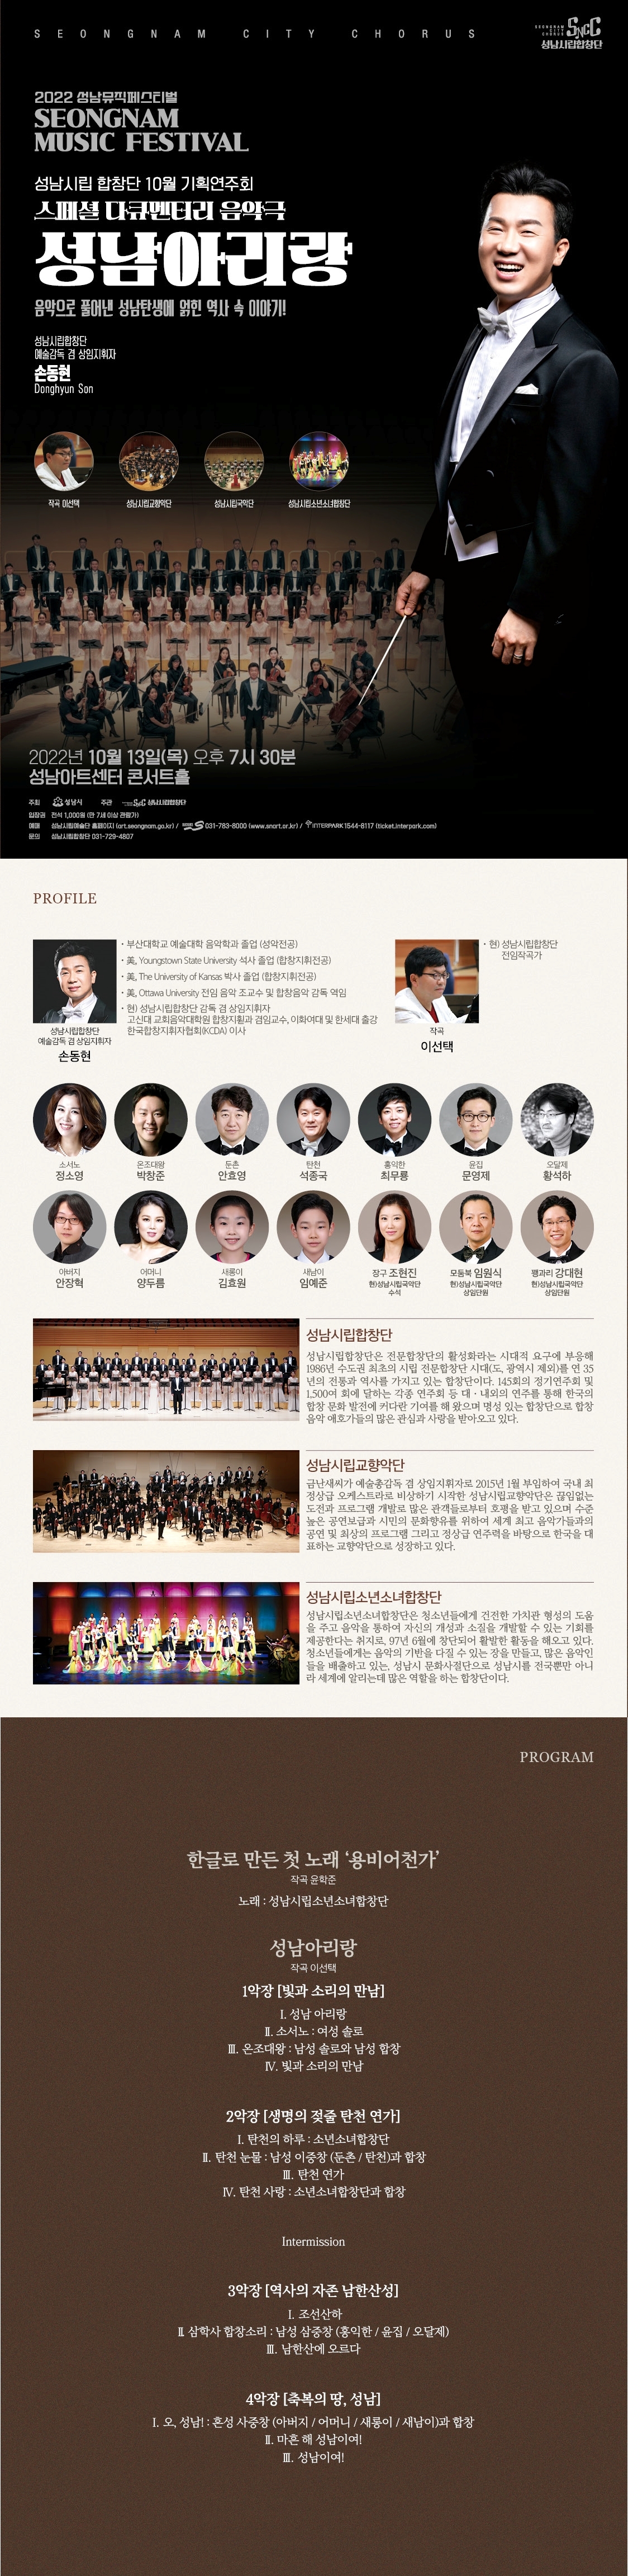 Seongnam City Choir's October Concert